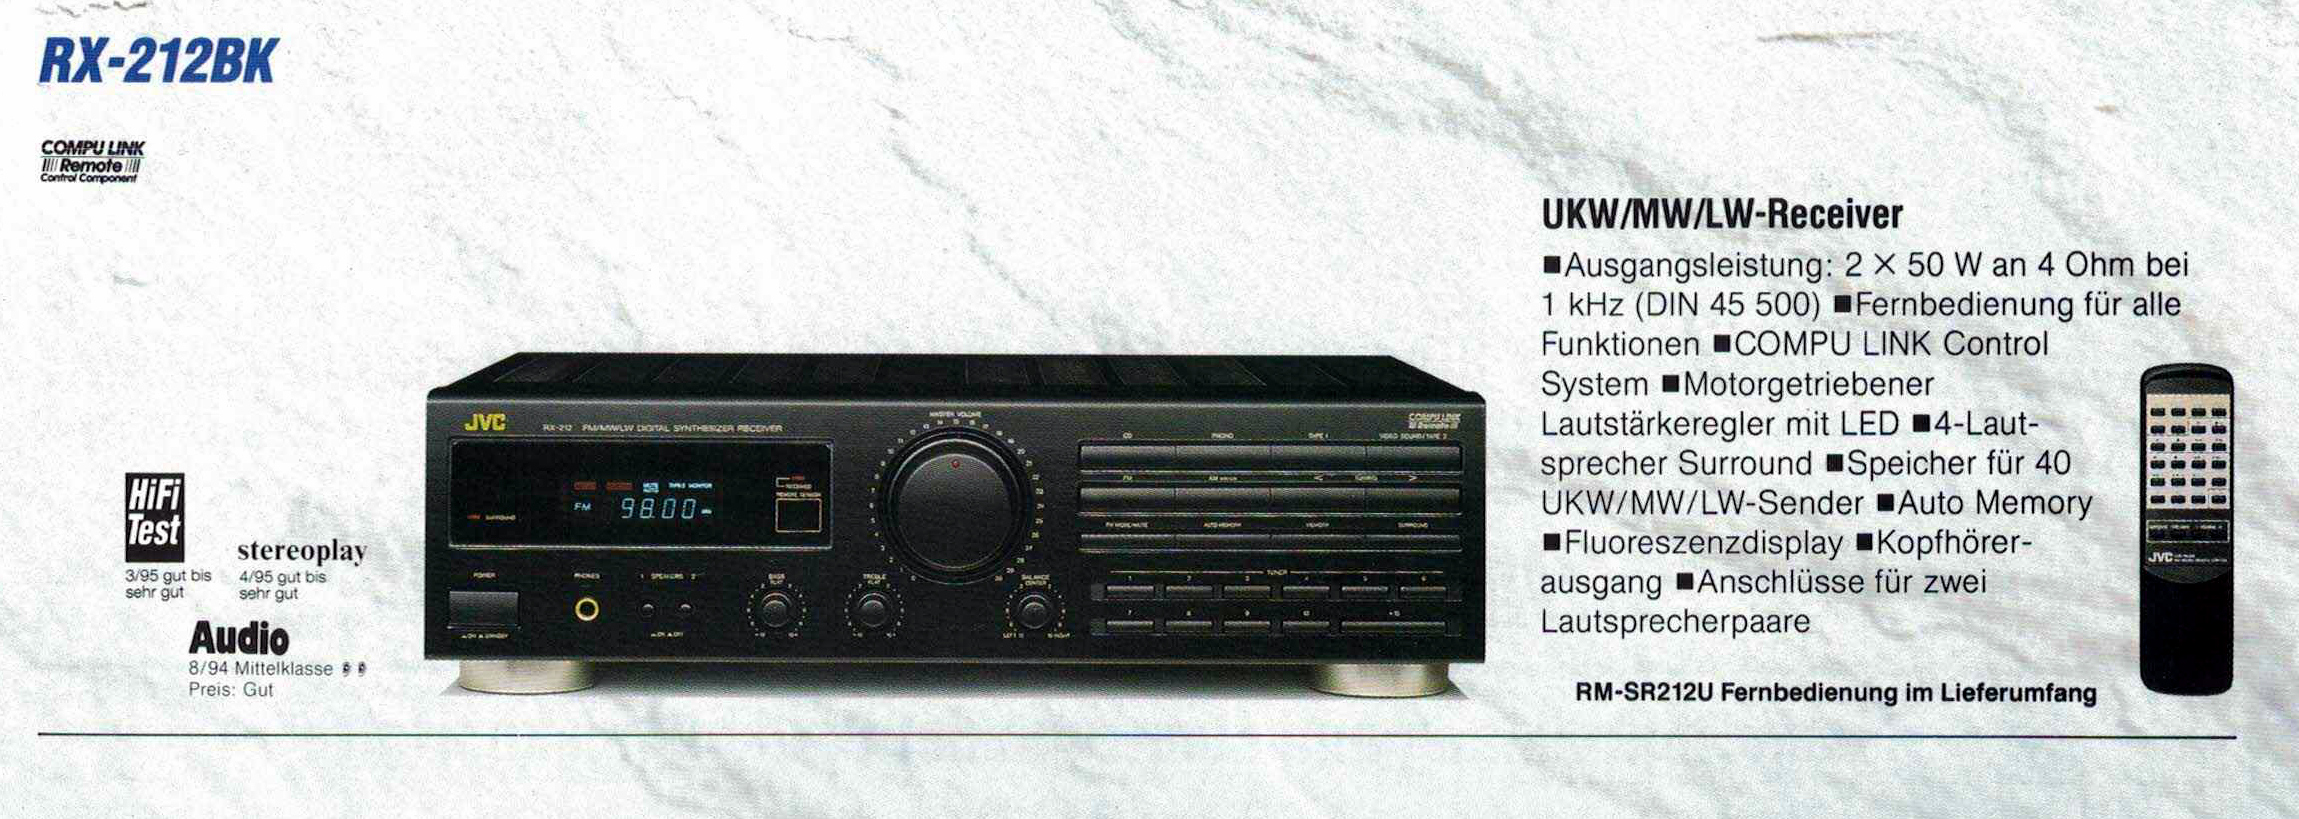 JVC RX-212 BK-Prospekt-1995.jpg